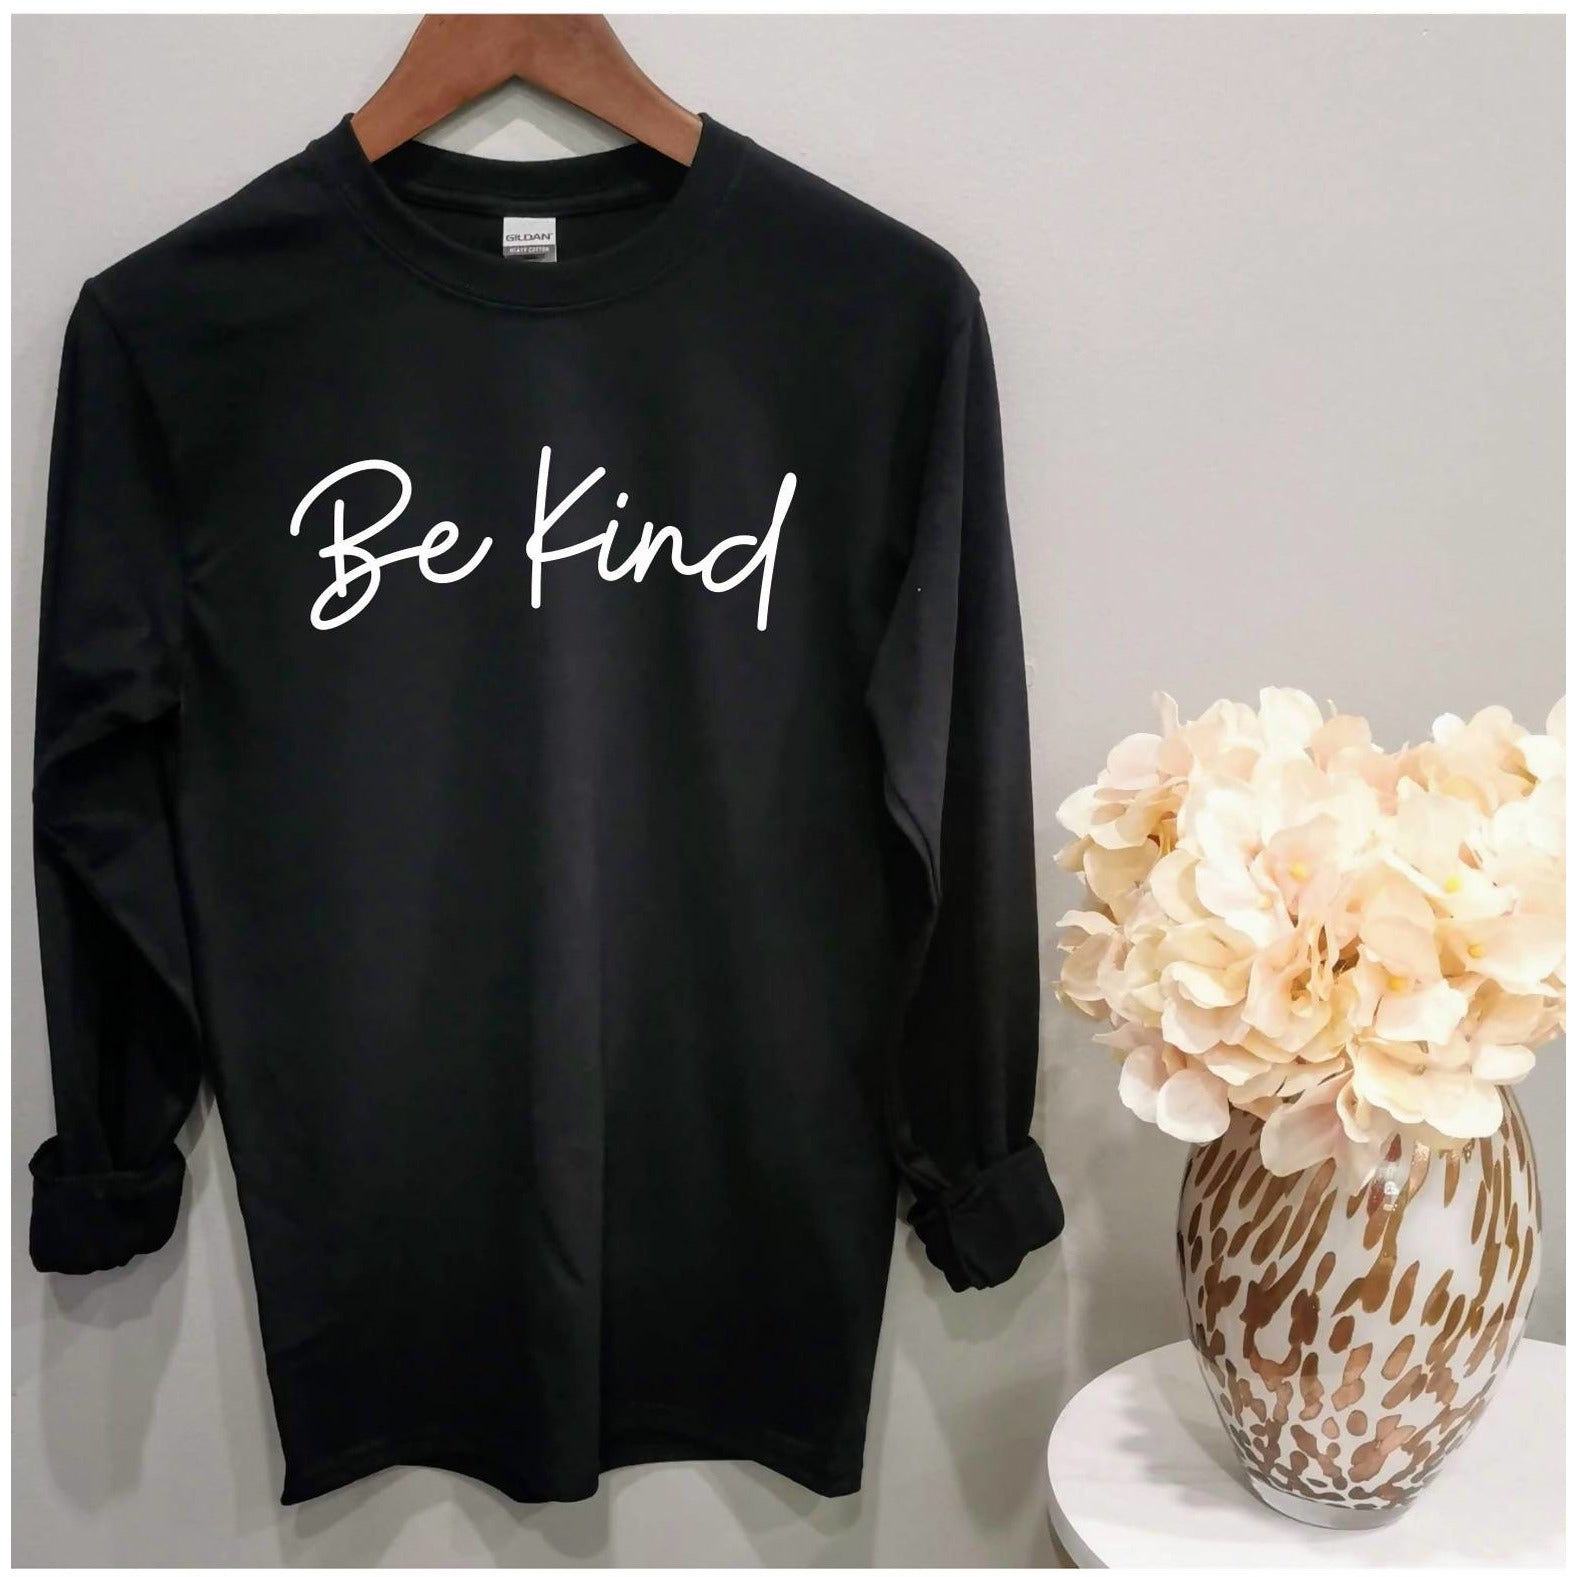 "Be Kind" Long Sleeve T-shirt